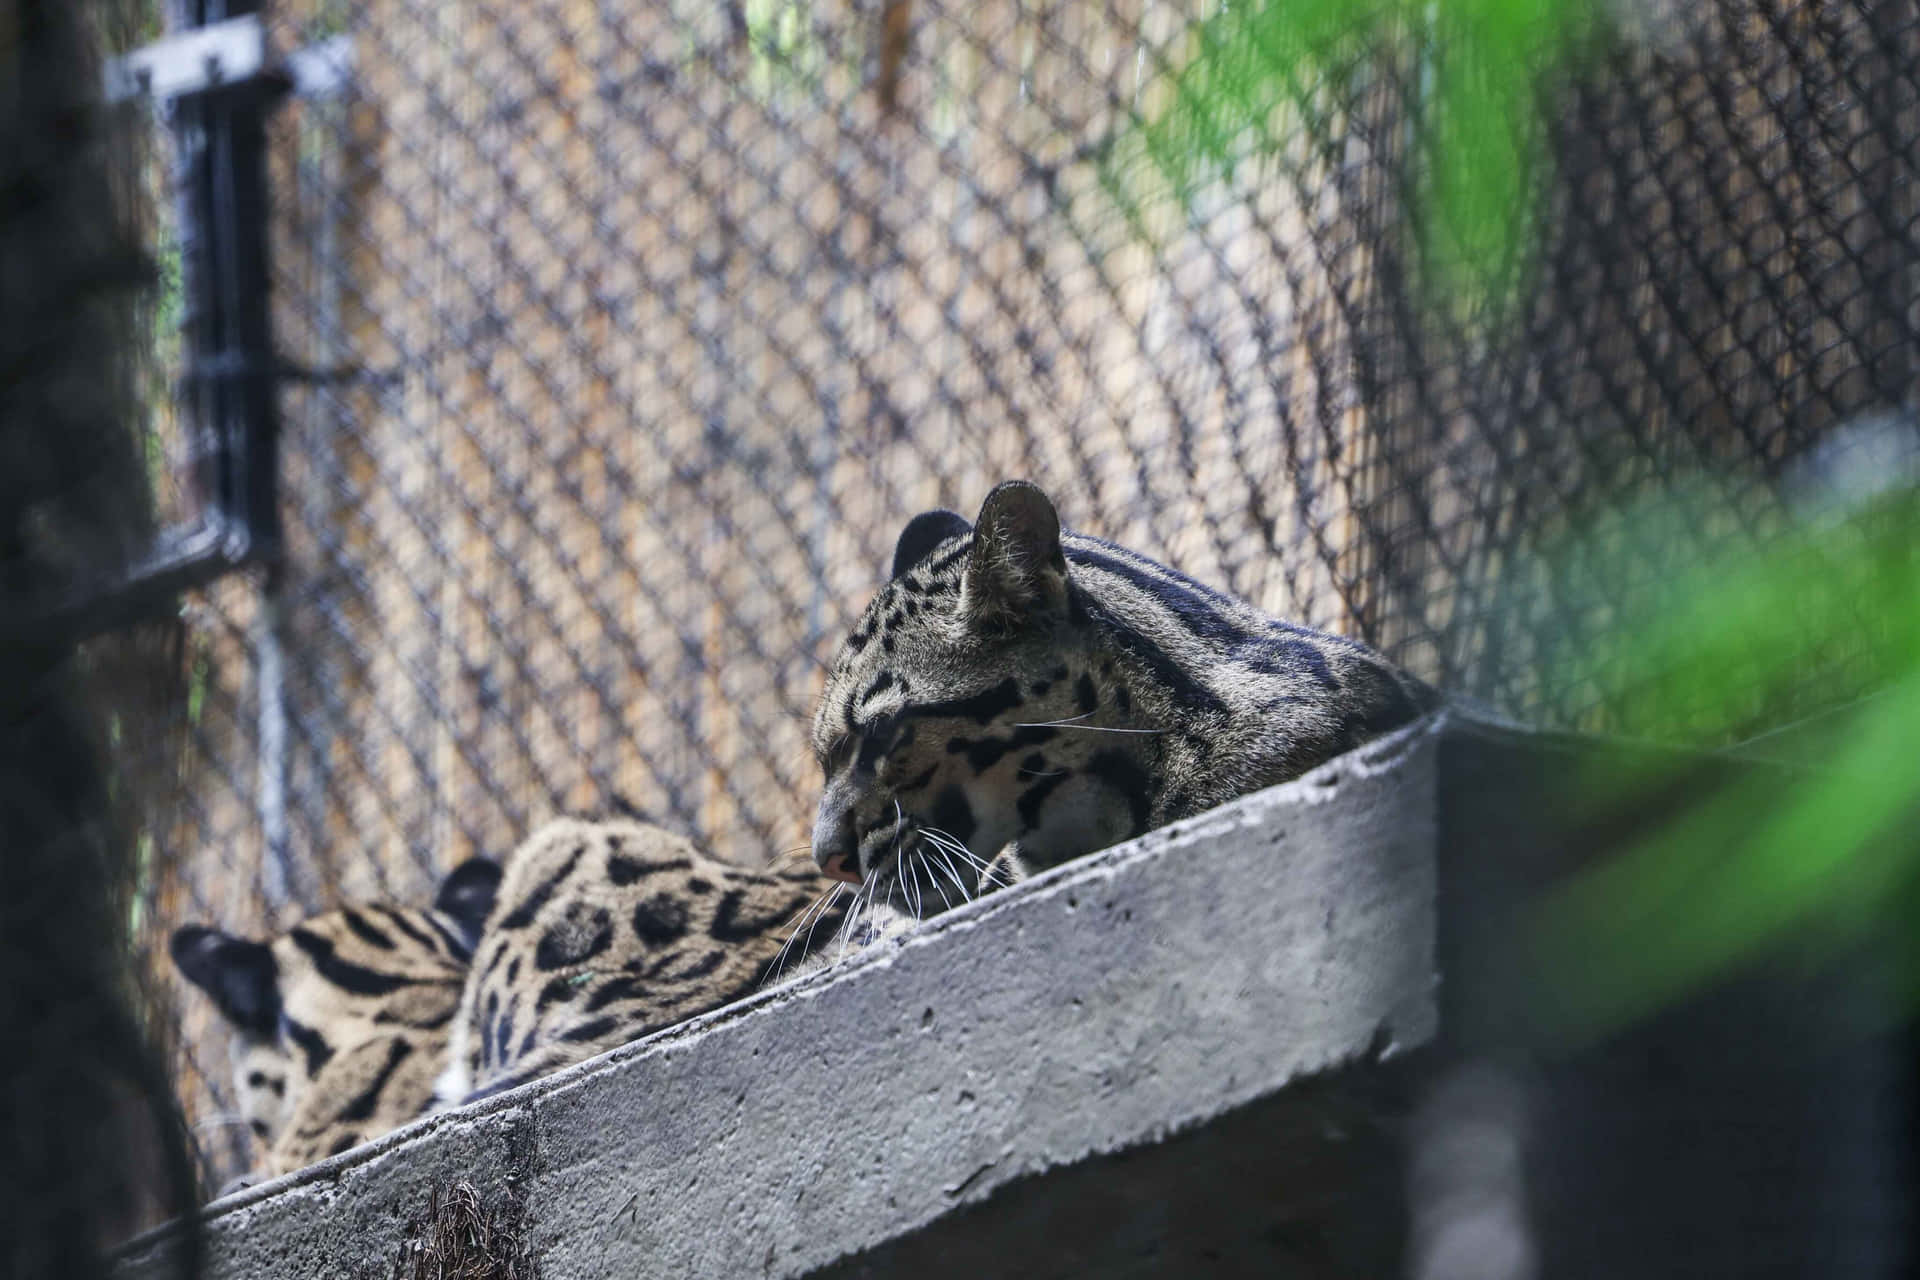 Leopard On Concrete Inside Cage Picture